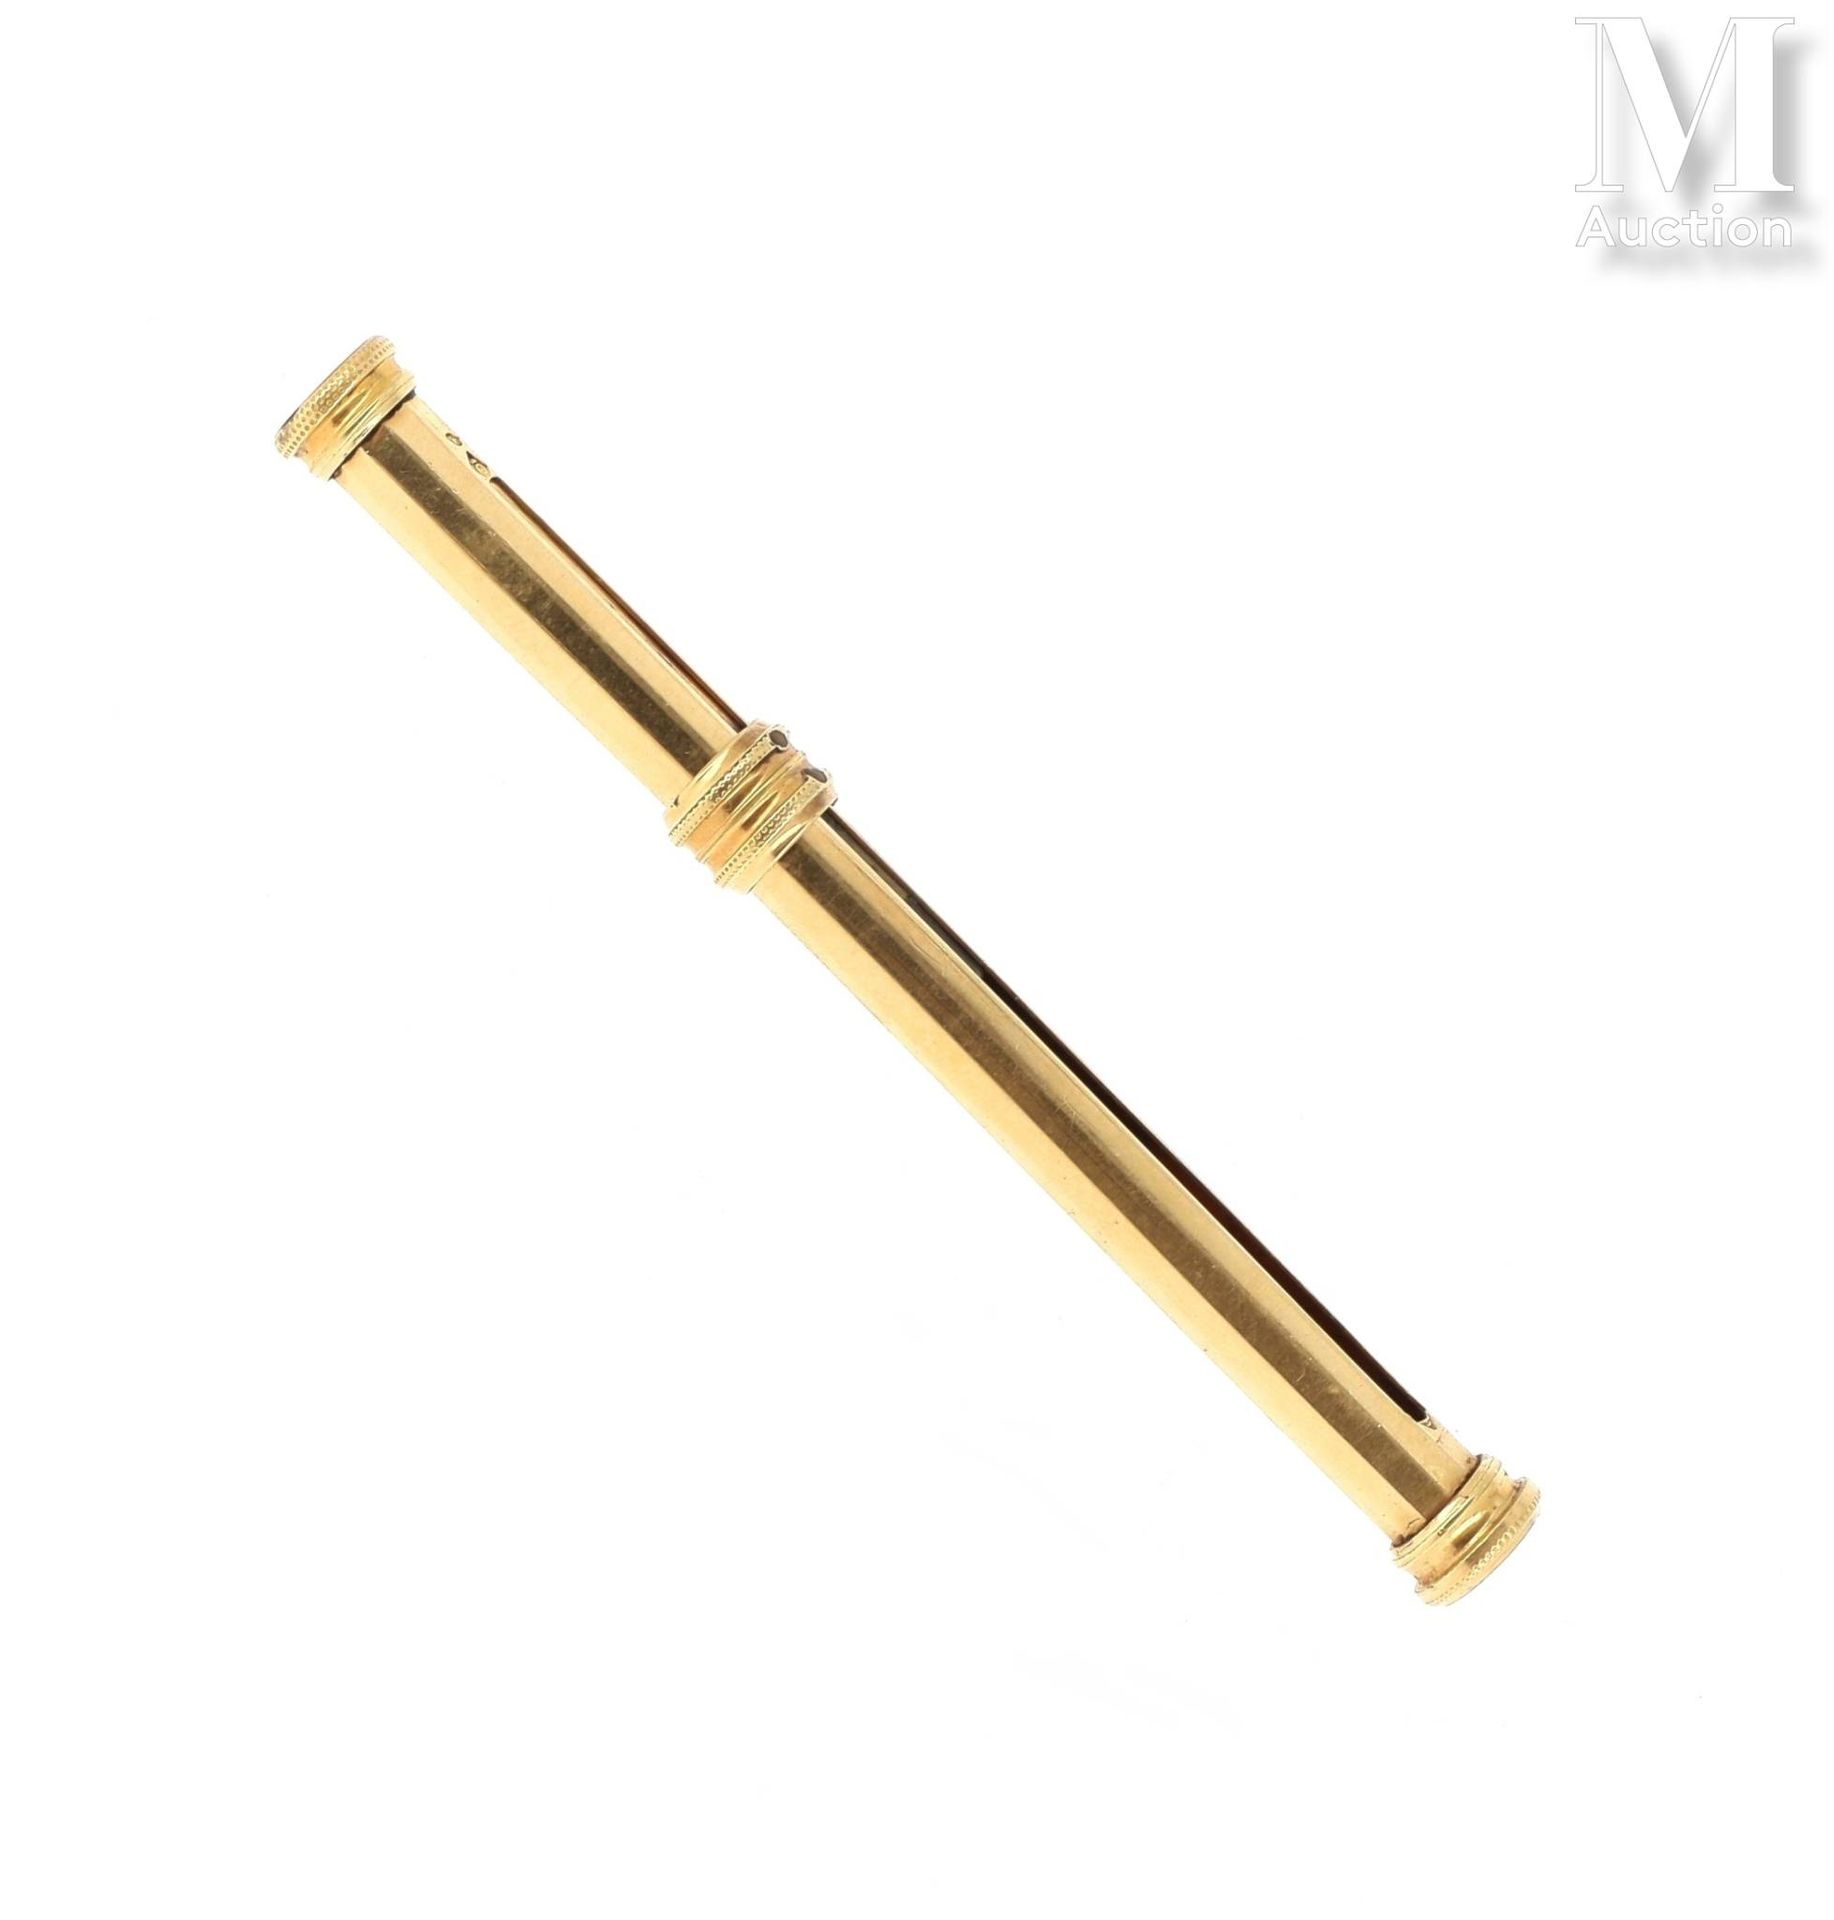 STYLO 18K（750°/°）黄金和金属制成的可伸缩和刻面笔。

毛重：16,6克。

长：87毫米

原样，事故和缺失的部分。